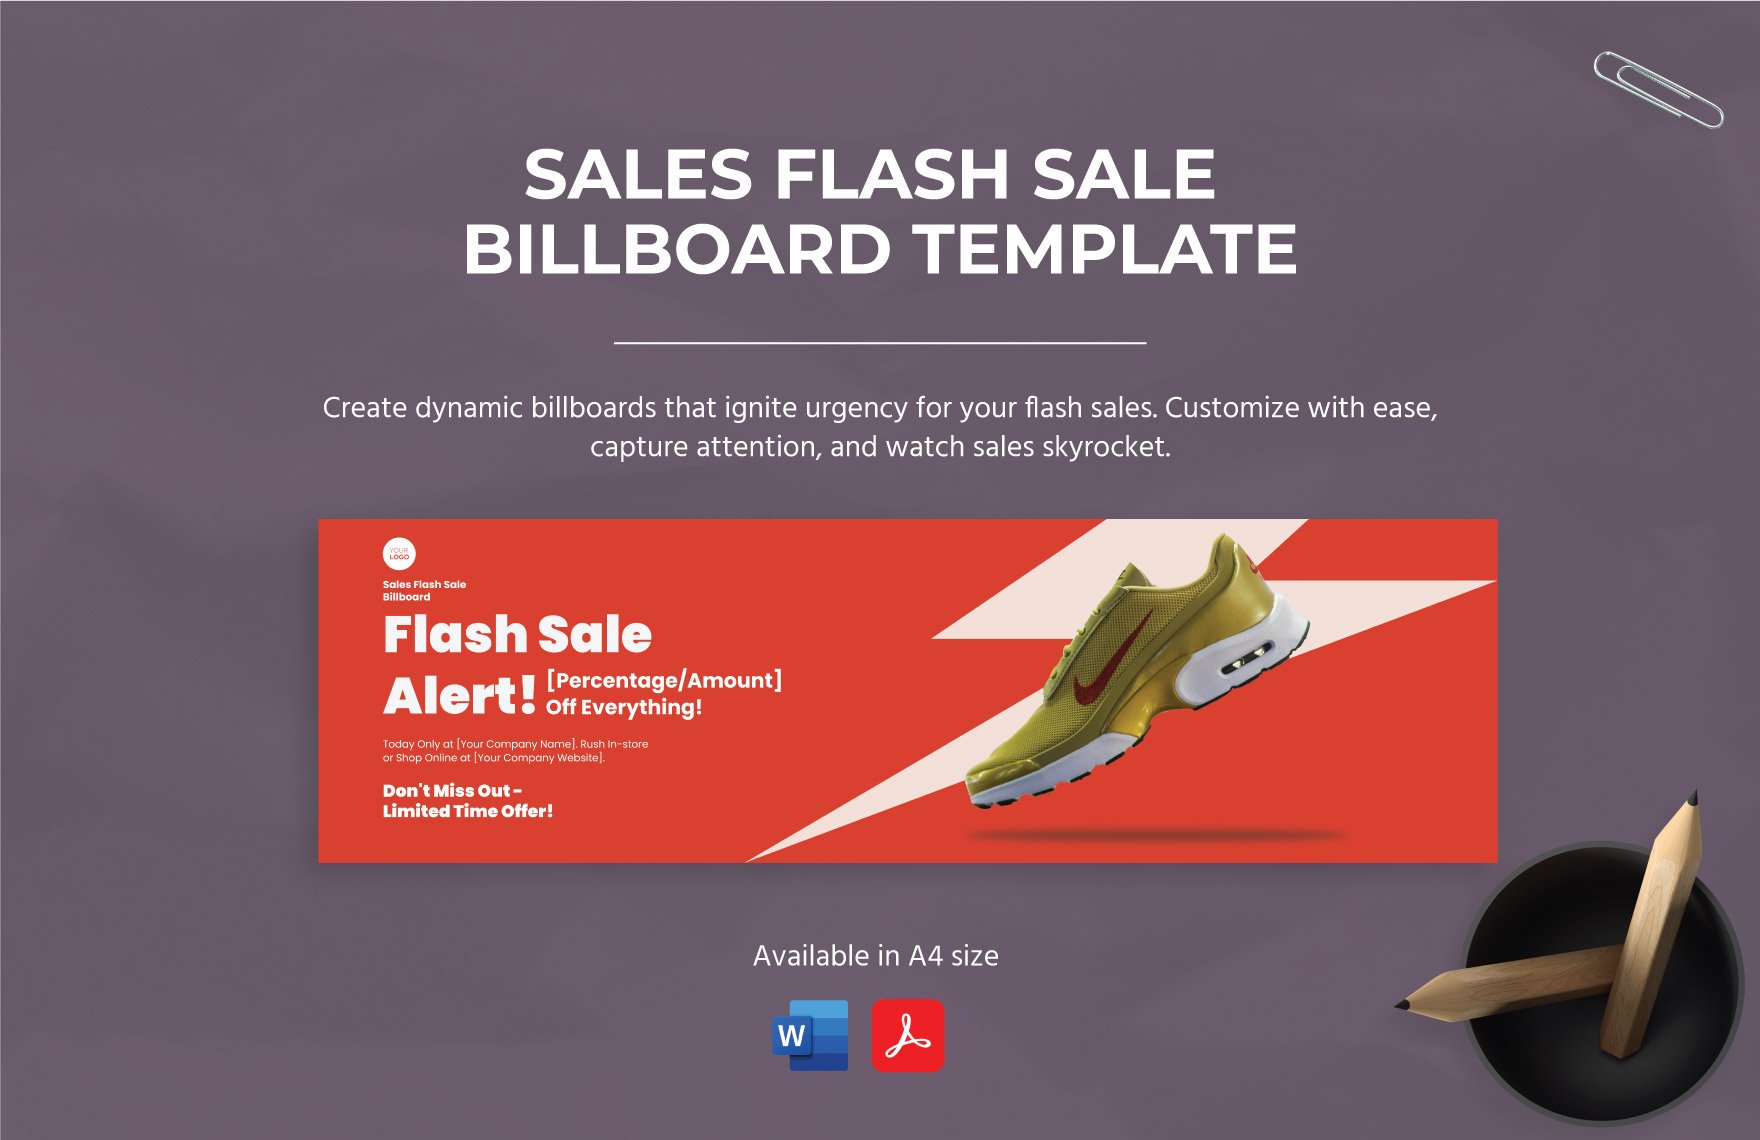 Sales Flash Sale Billboard Template in Word, PDF